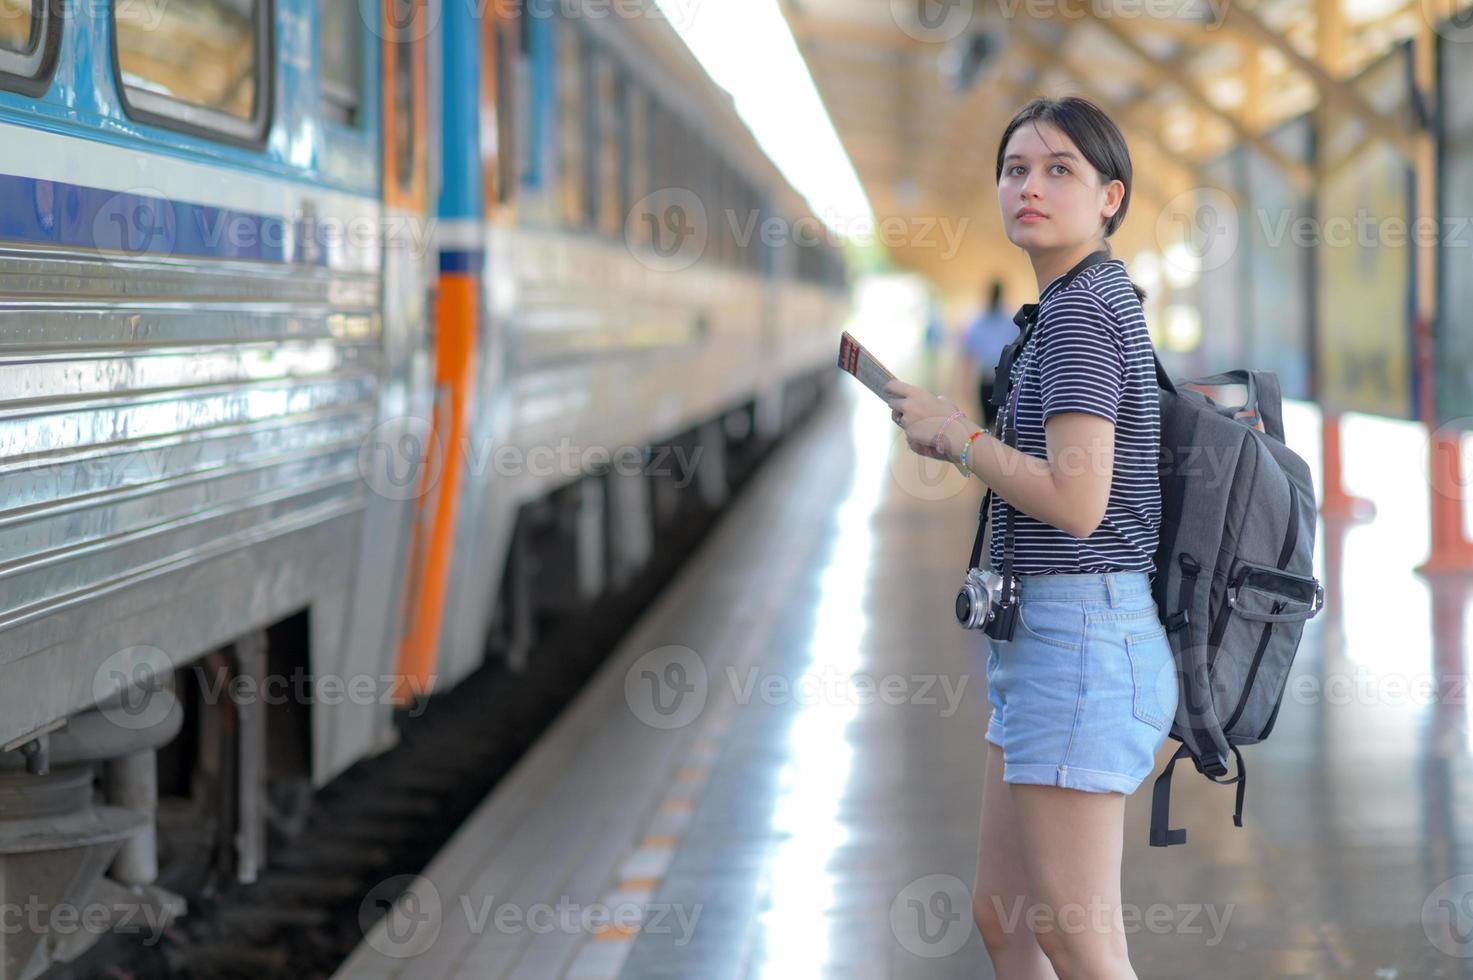 viajero internacional femenino que sostiene el mapa con la mochila esperando el tren. foto